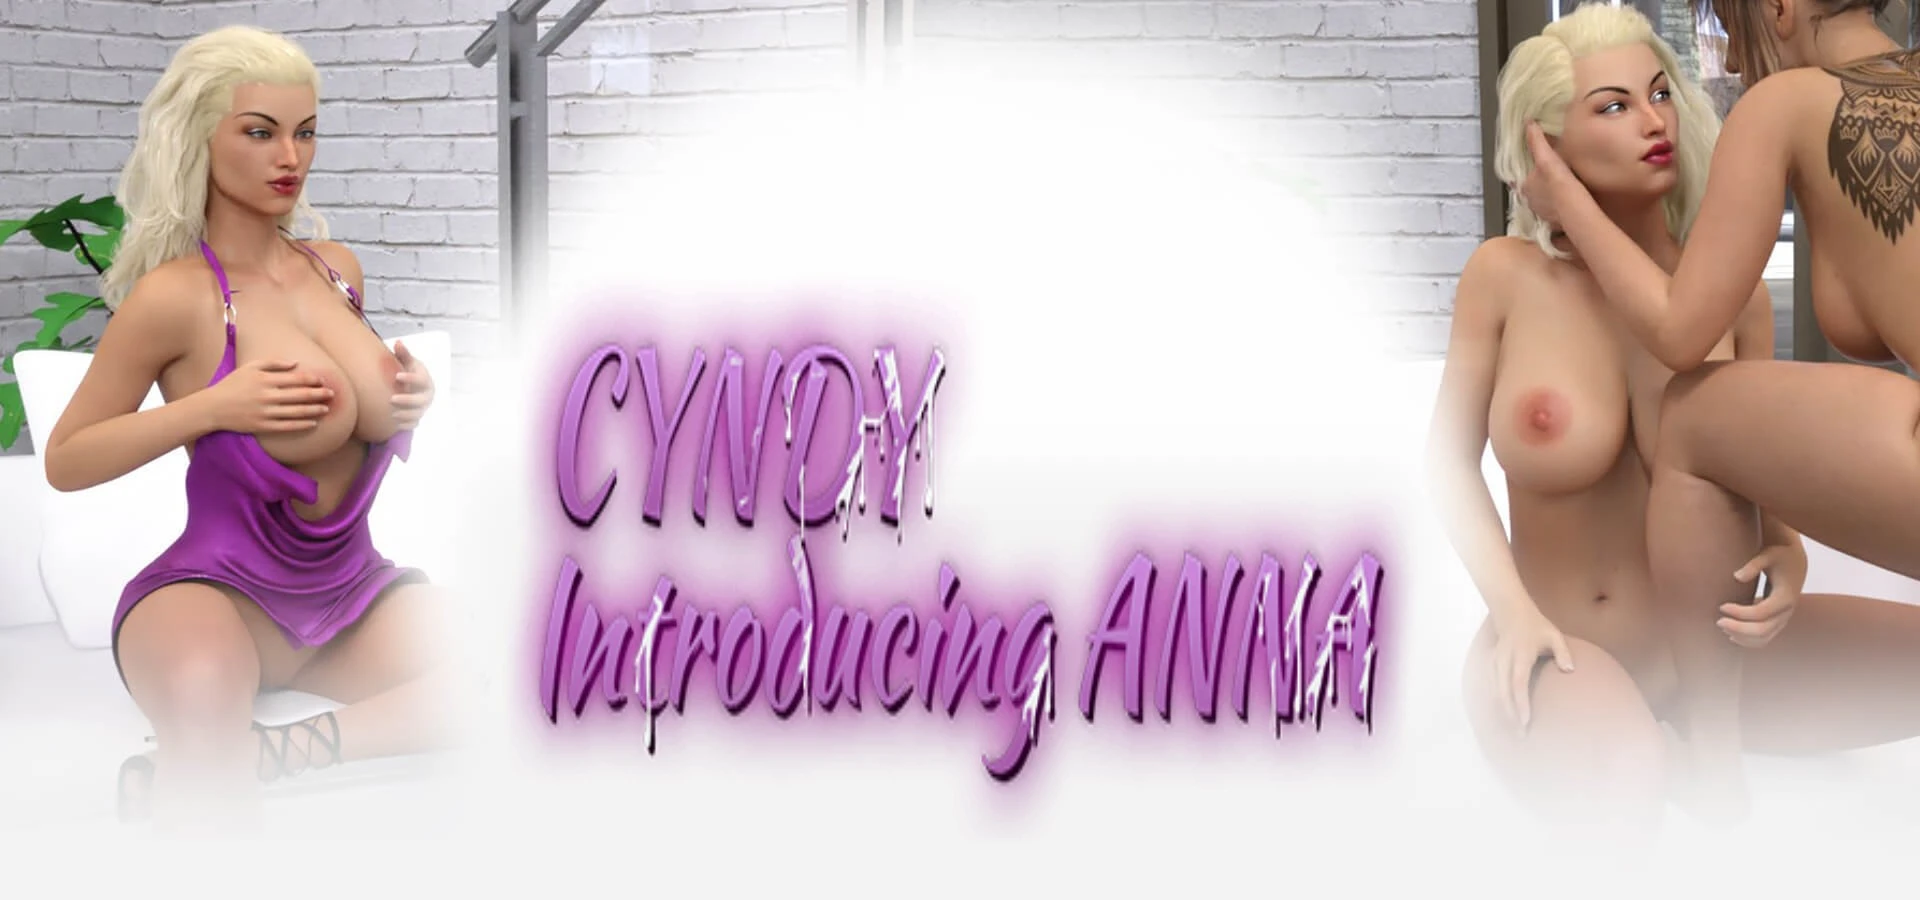 Cyndy - Introducing Anna DLC main image